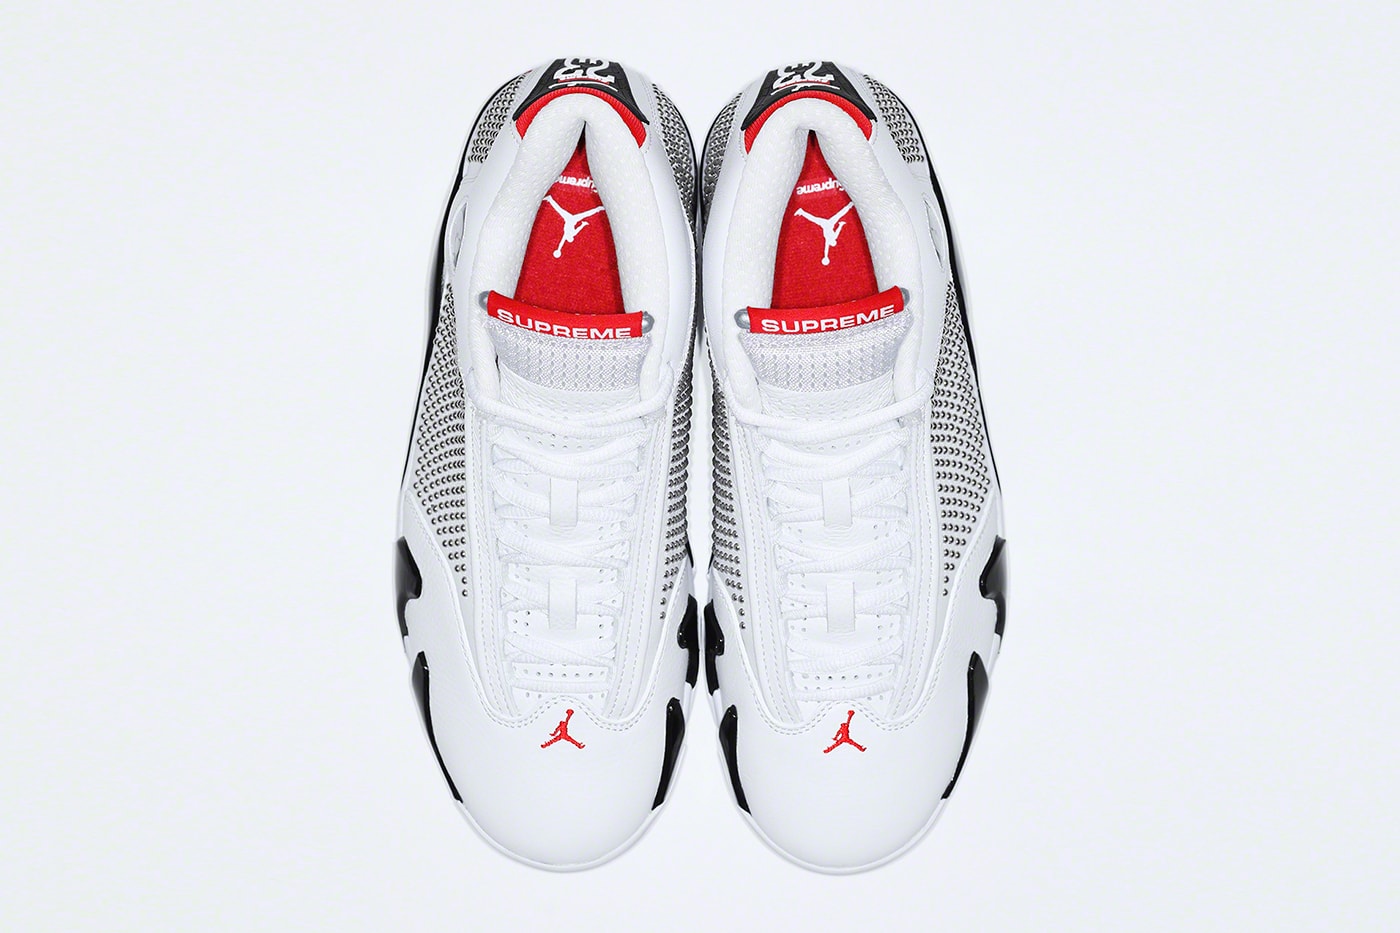 Supreme x Air Jordan 14 On-Foot Look